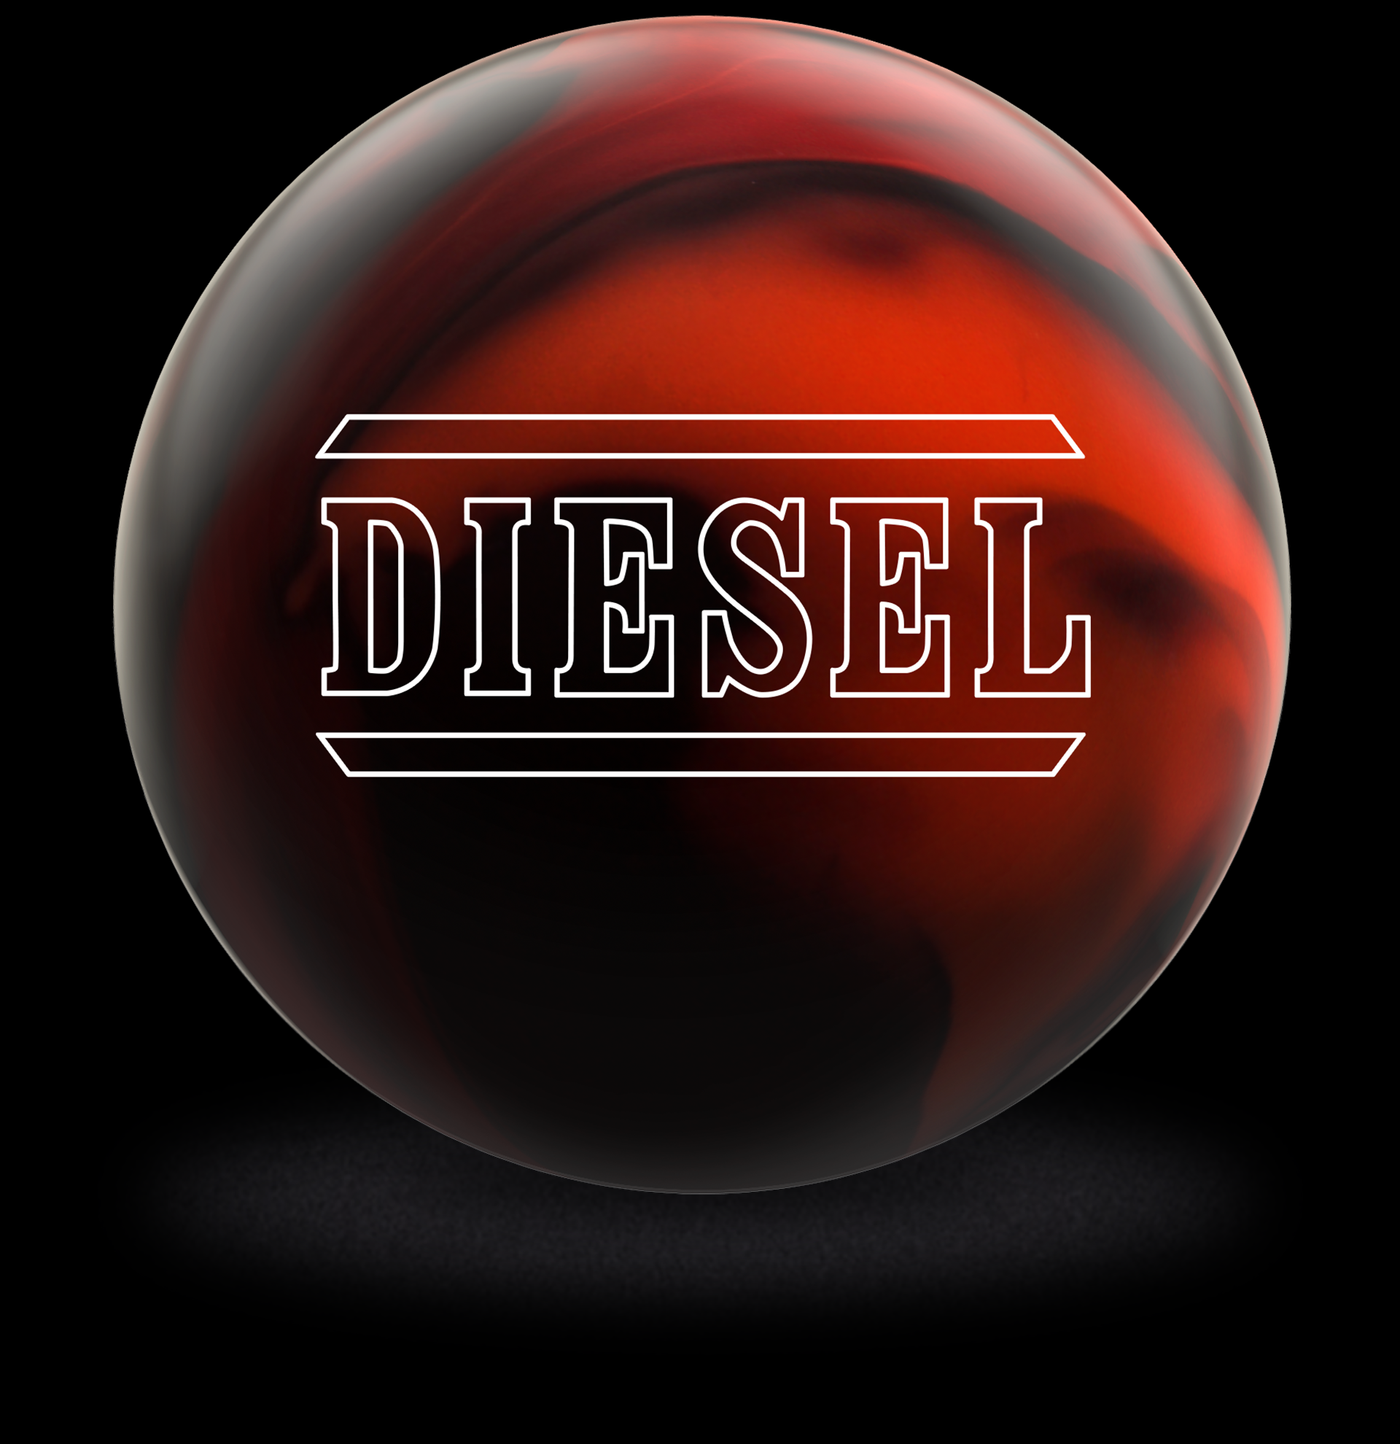 Diesel Ball